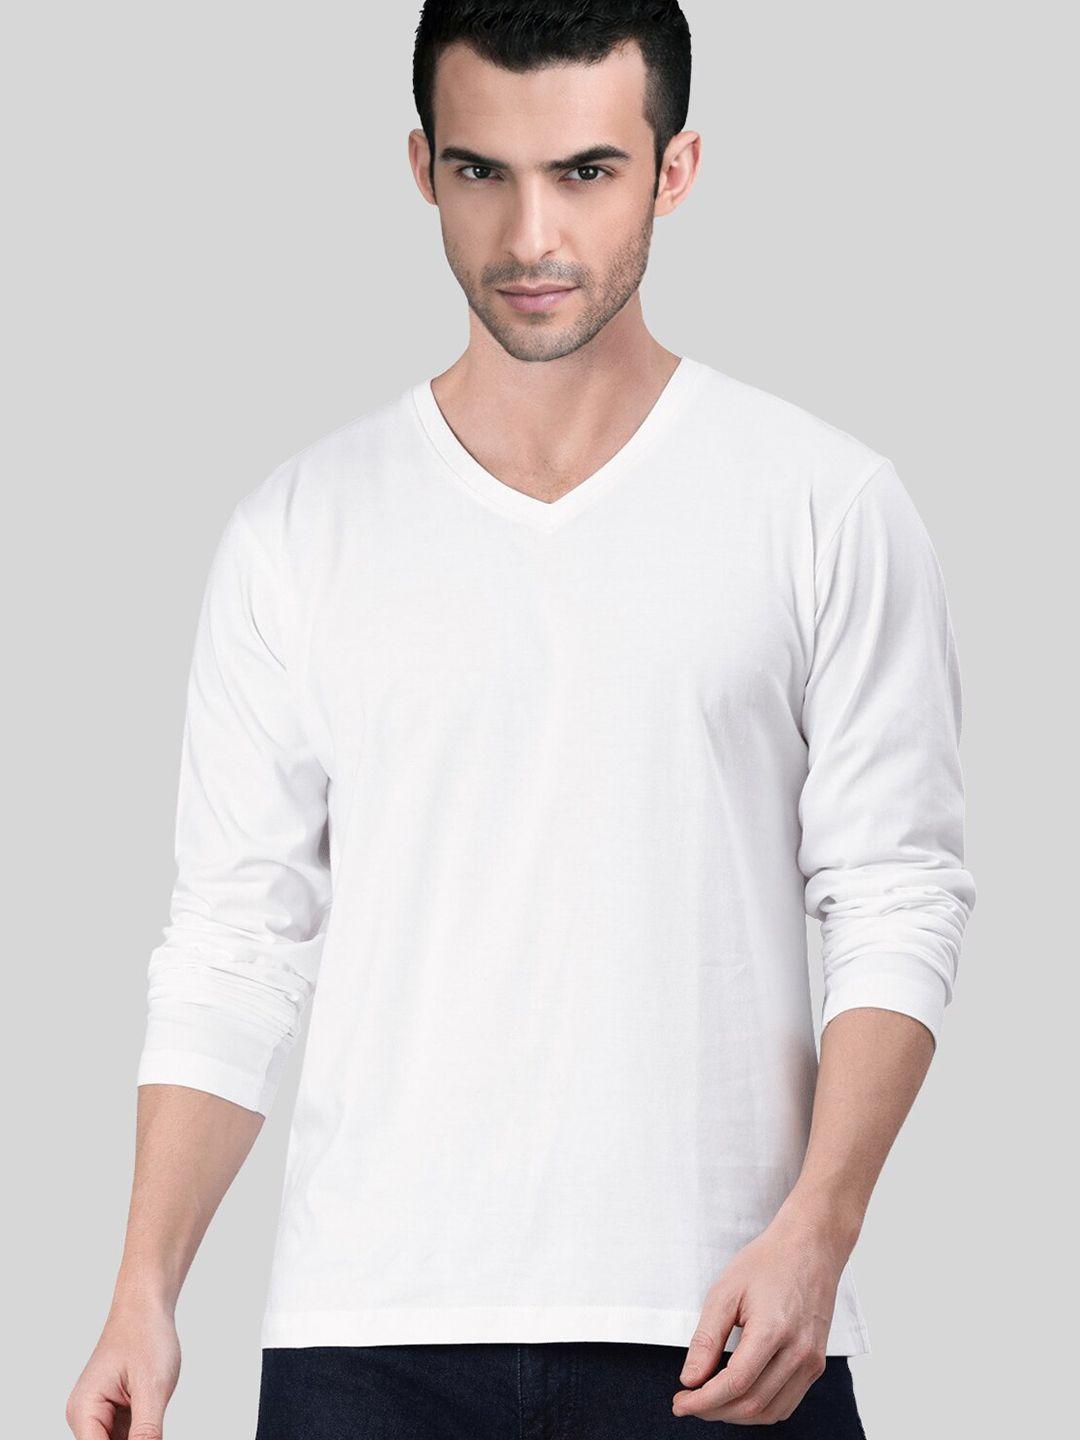 pootlu men white v-neck pure cotton t-shirt